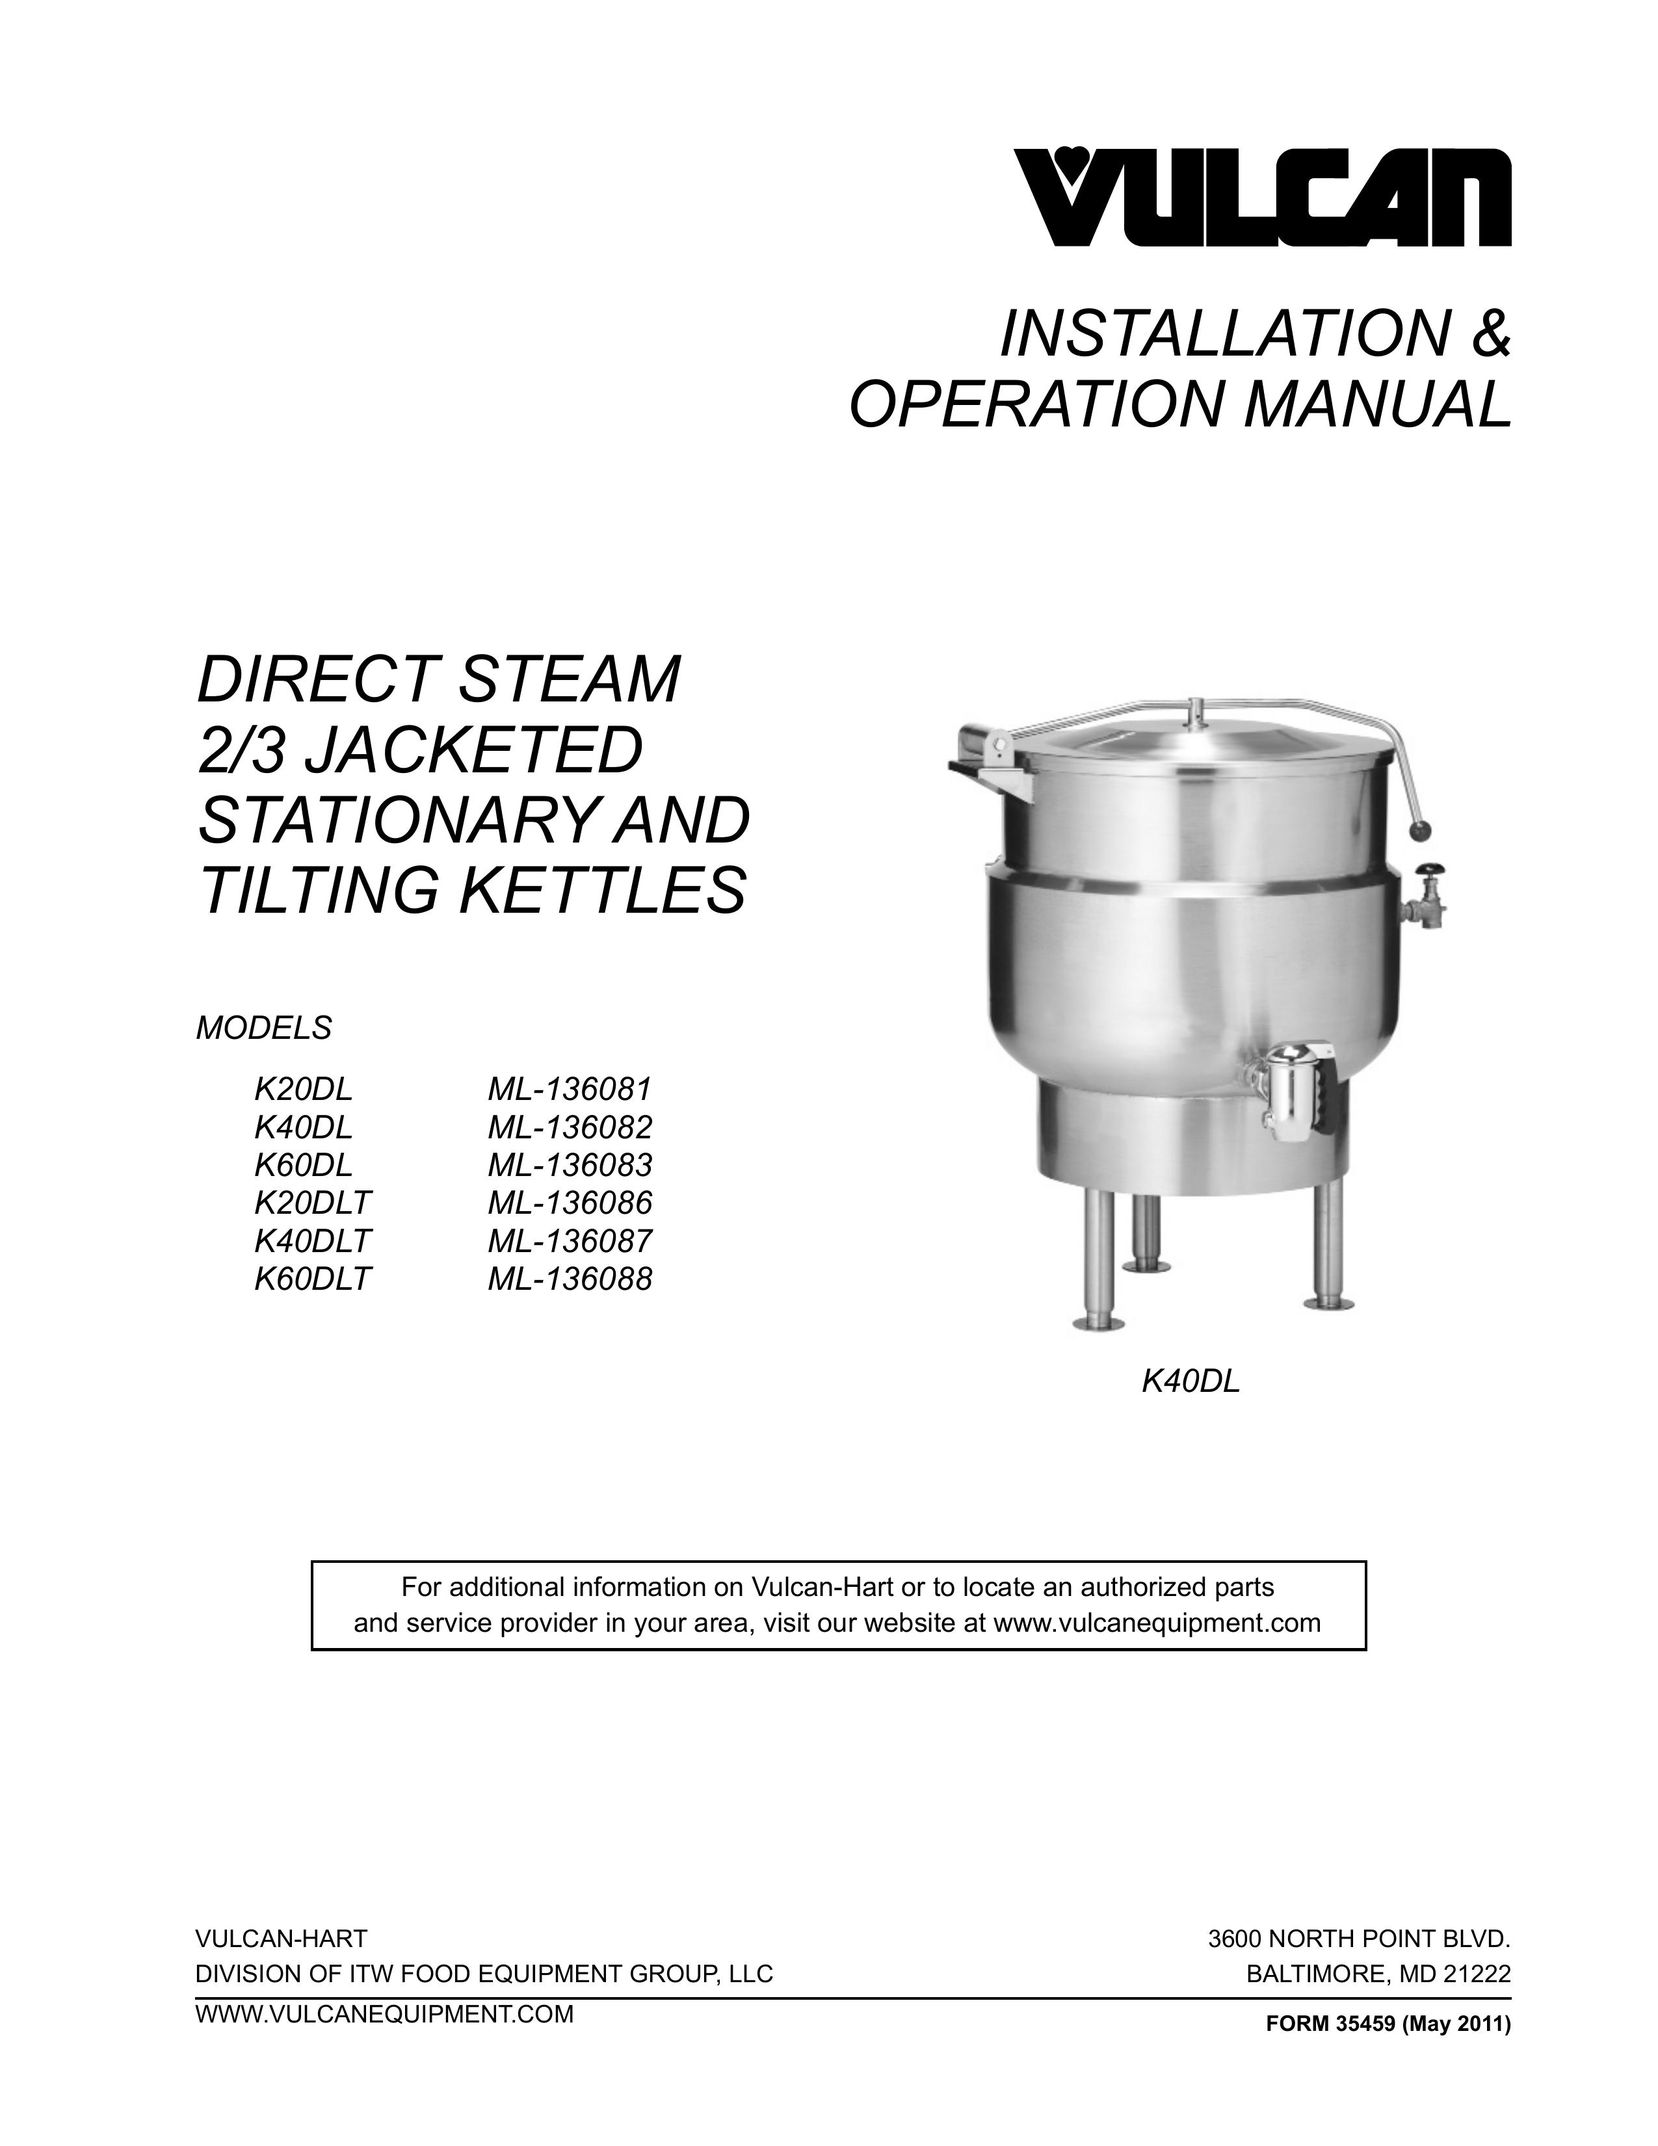 Vulcan-Hart K60DLT Hot Beverage Maker User Manual